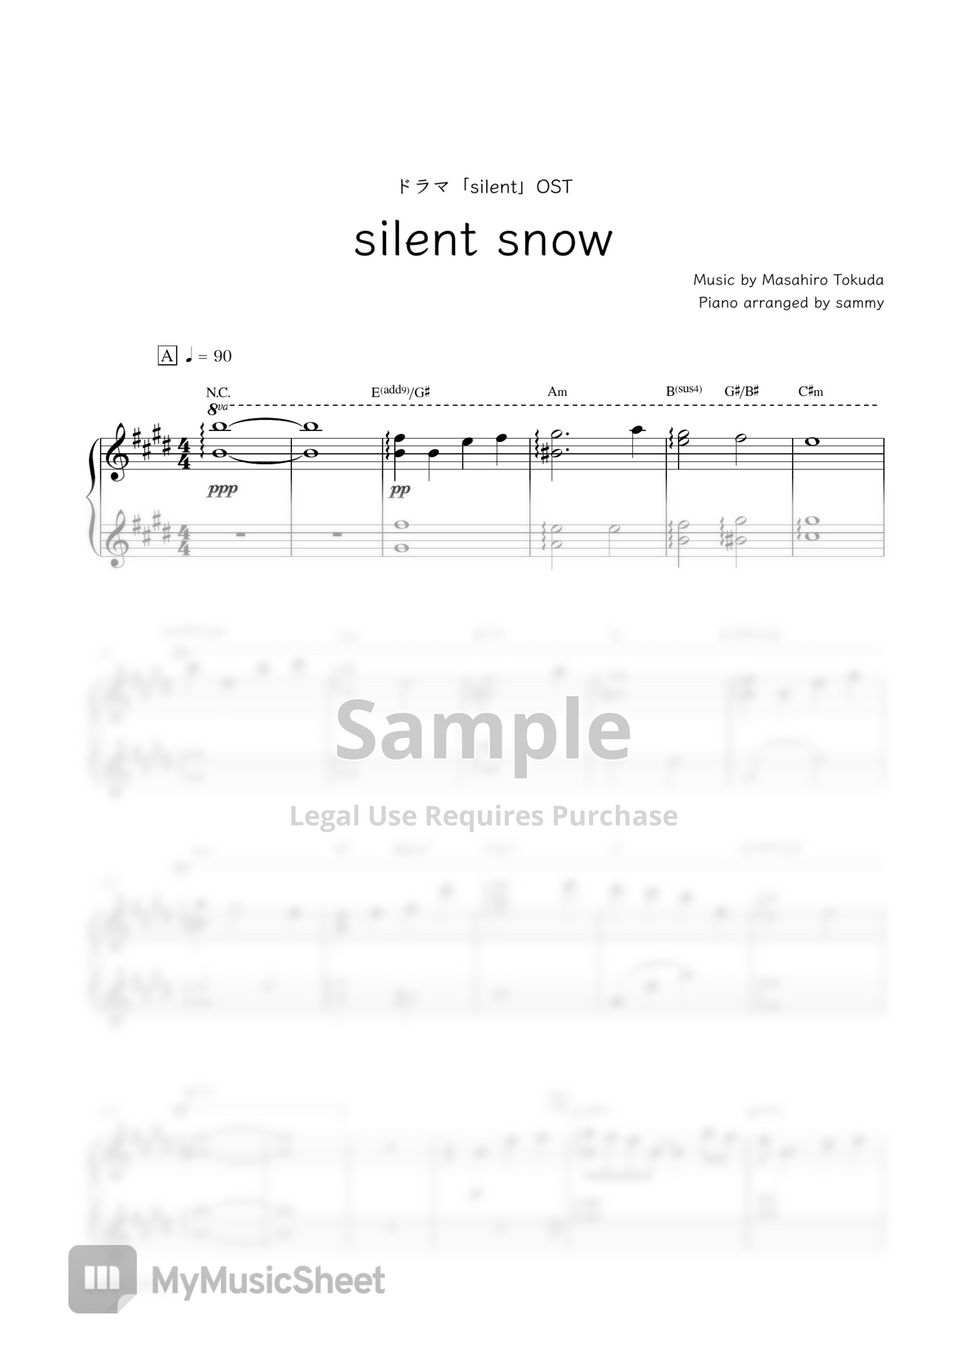 Japanese TV series "Silent" OST - silent snow by sammy